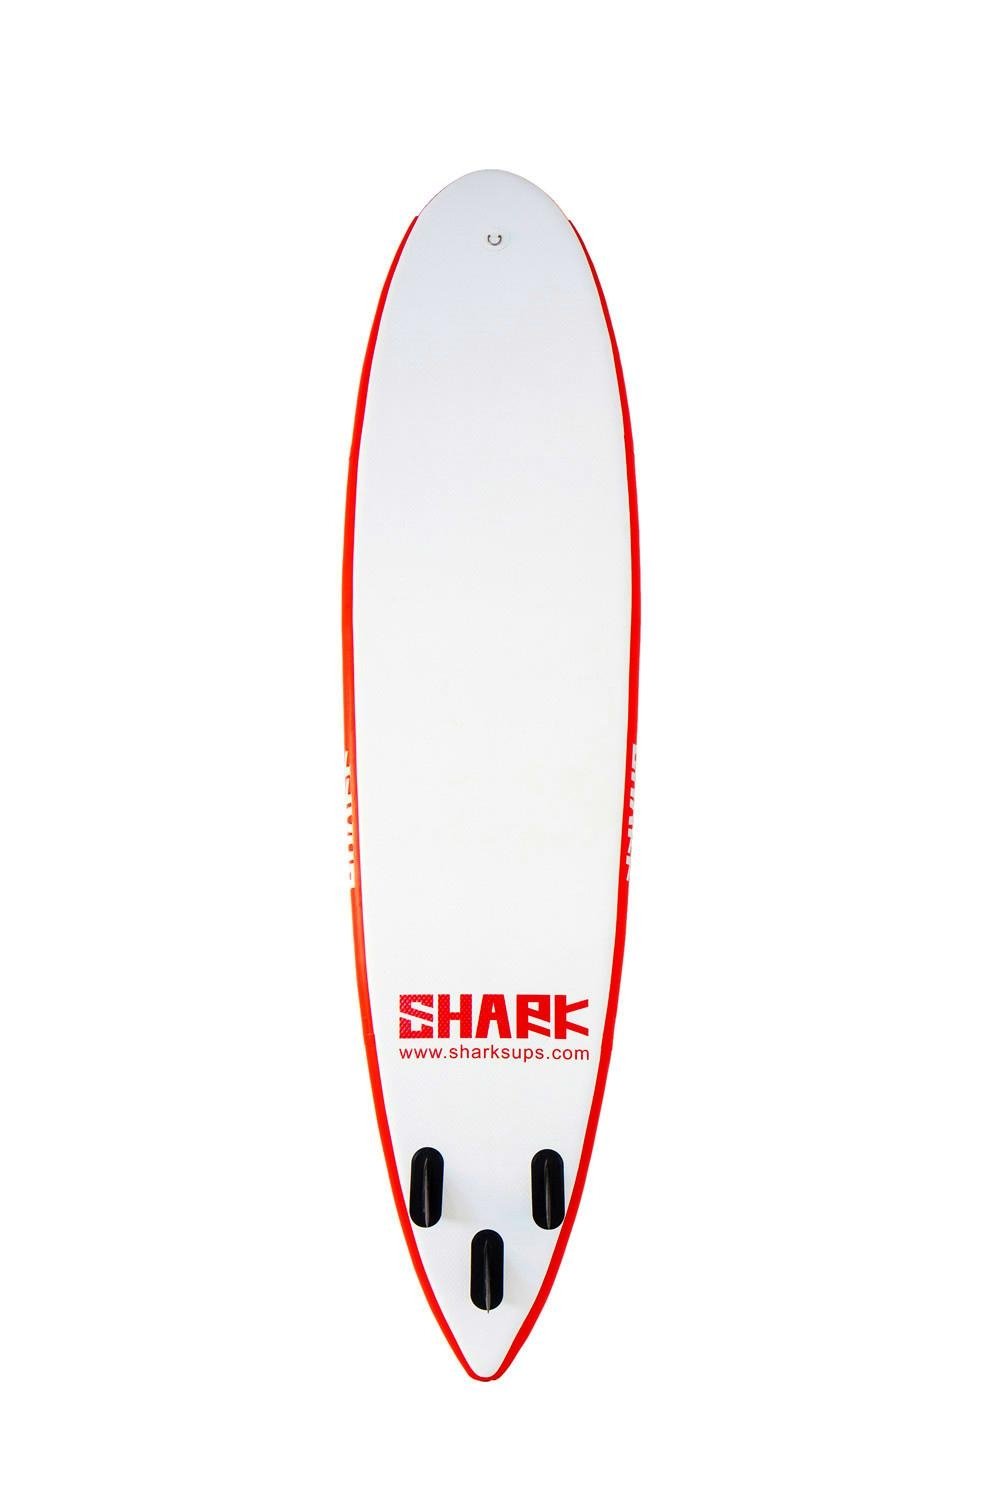 Shark SUPs inflatale stand uppaddle board 10'6 LEMON SHAR 3